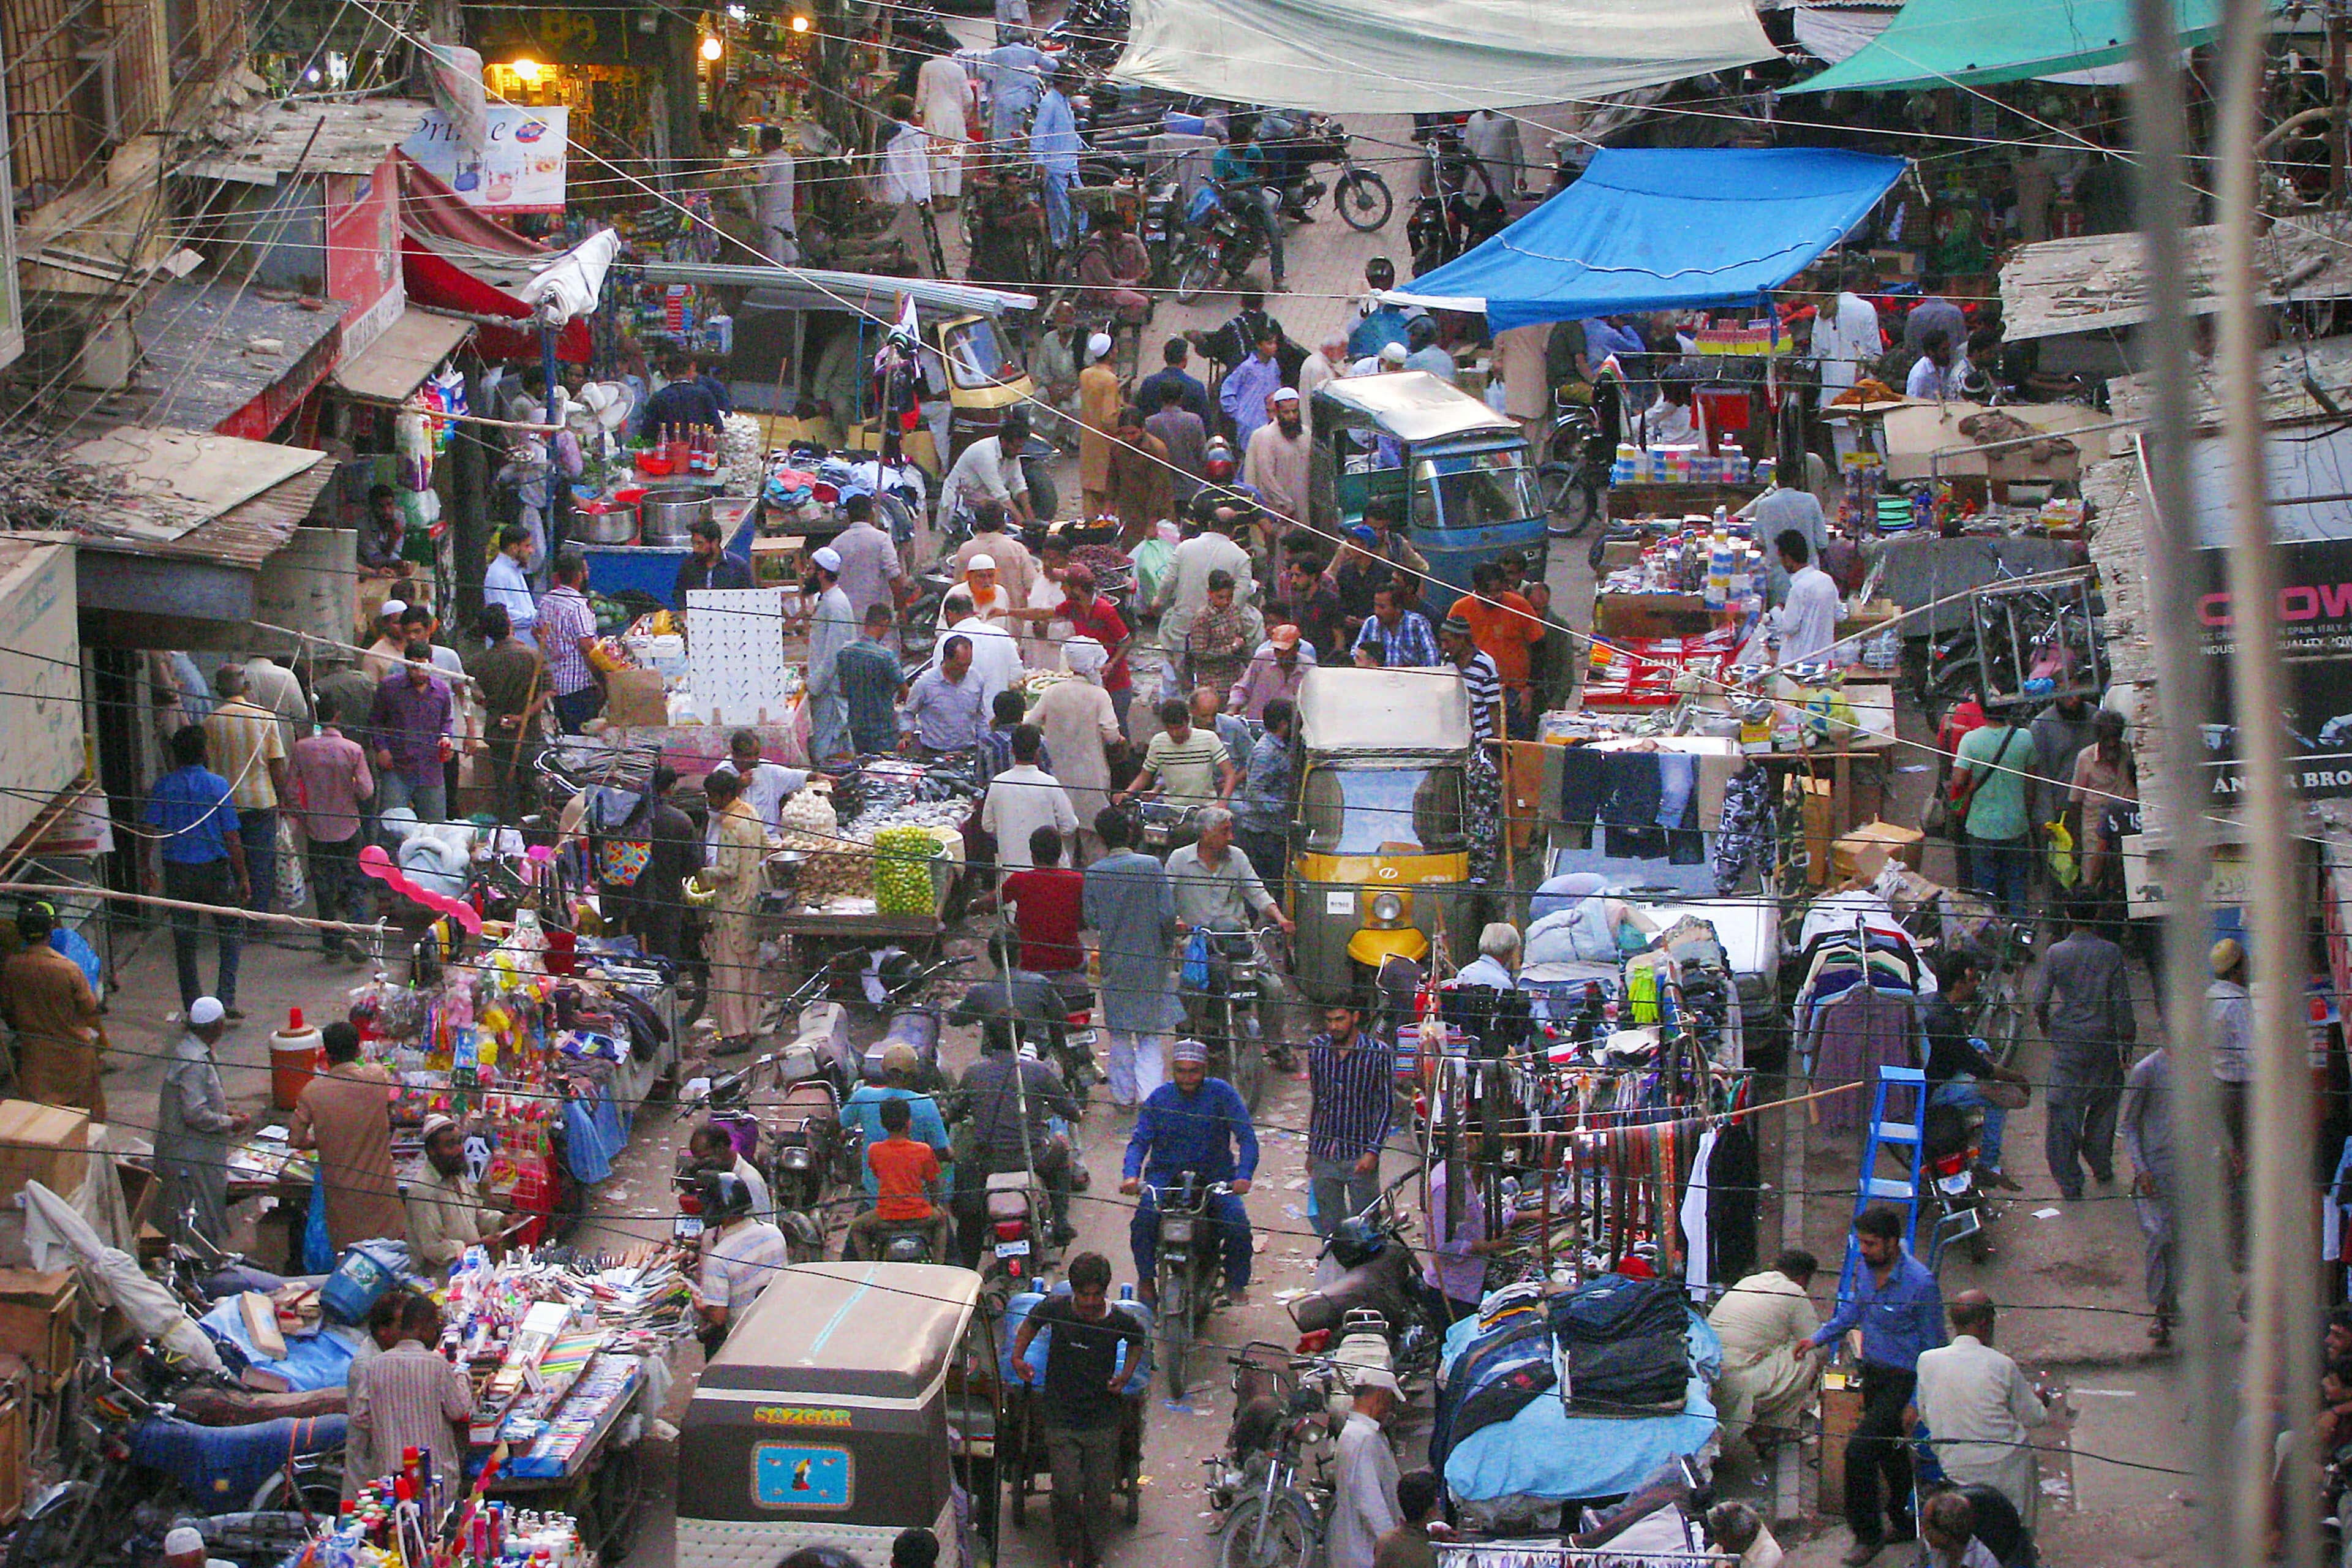 Crowded market image